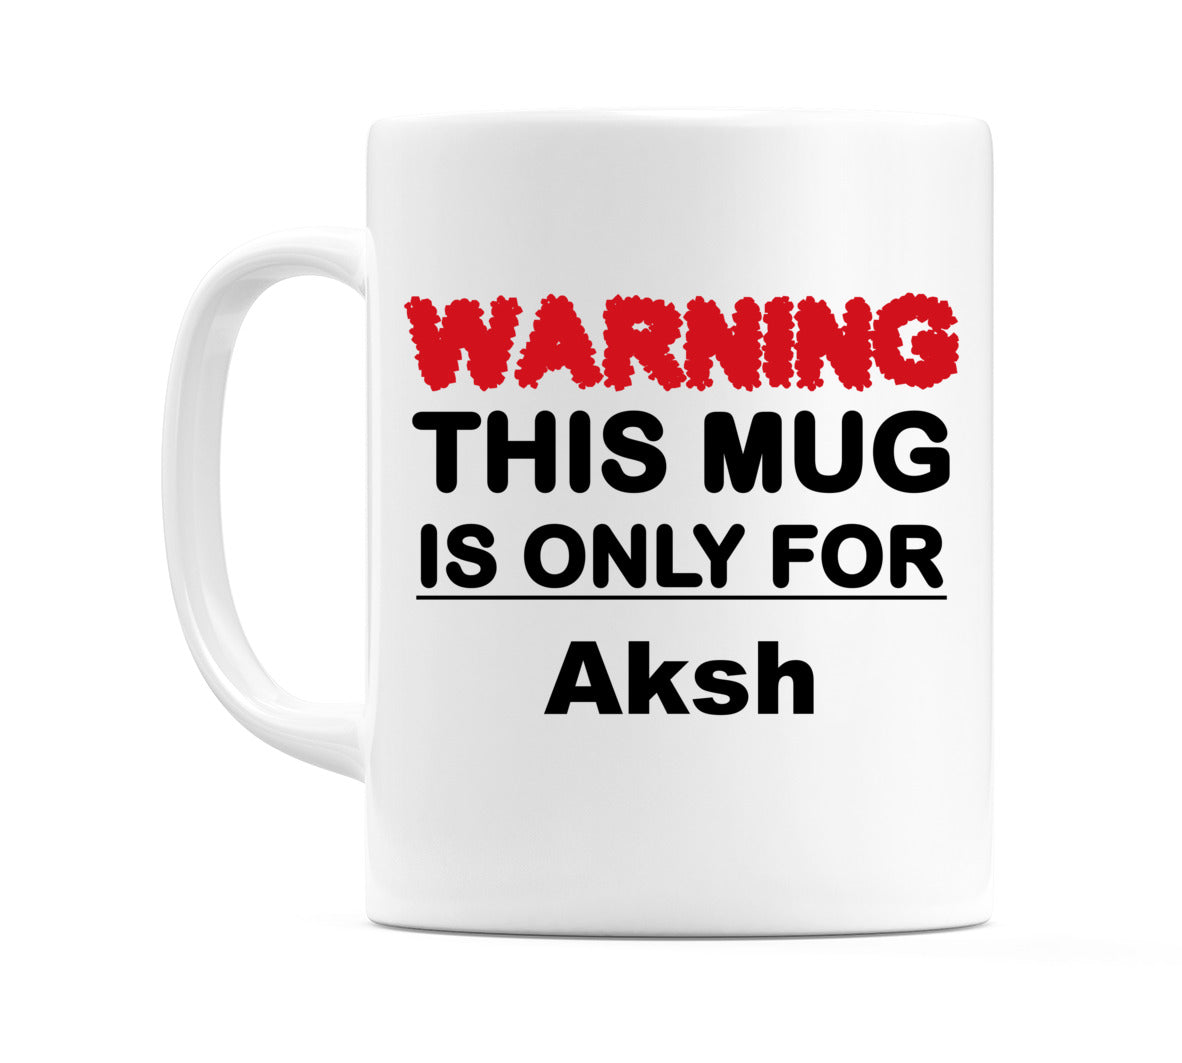 Warning This Mug is ONLY for Aksh Mug